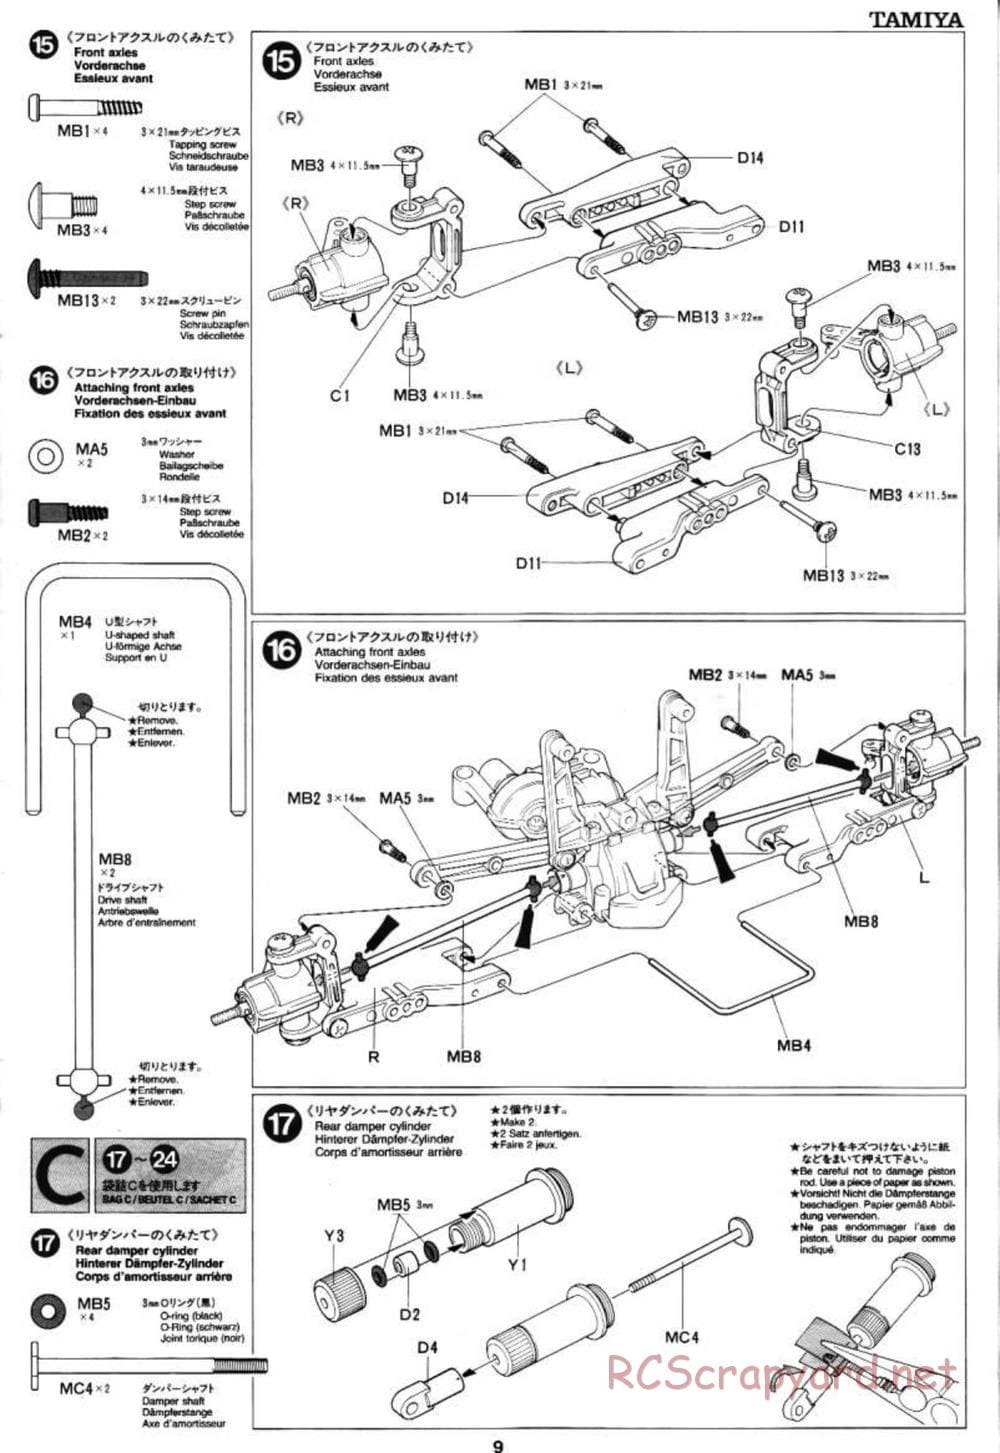 Tamiya - Blazing Star Chassis - Manual - Page 9